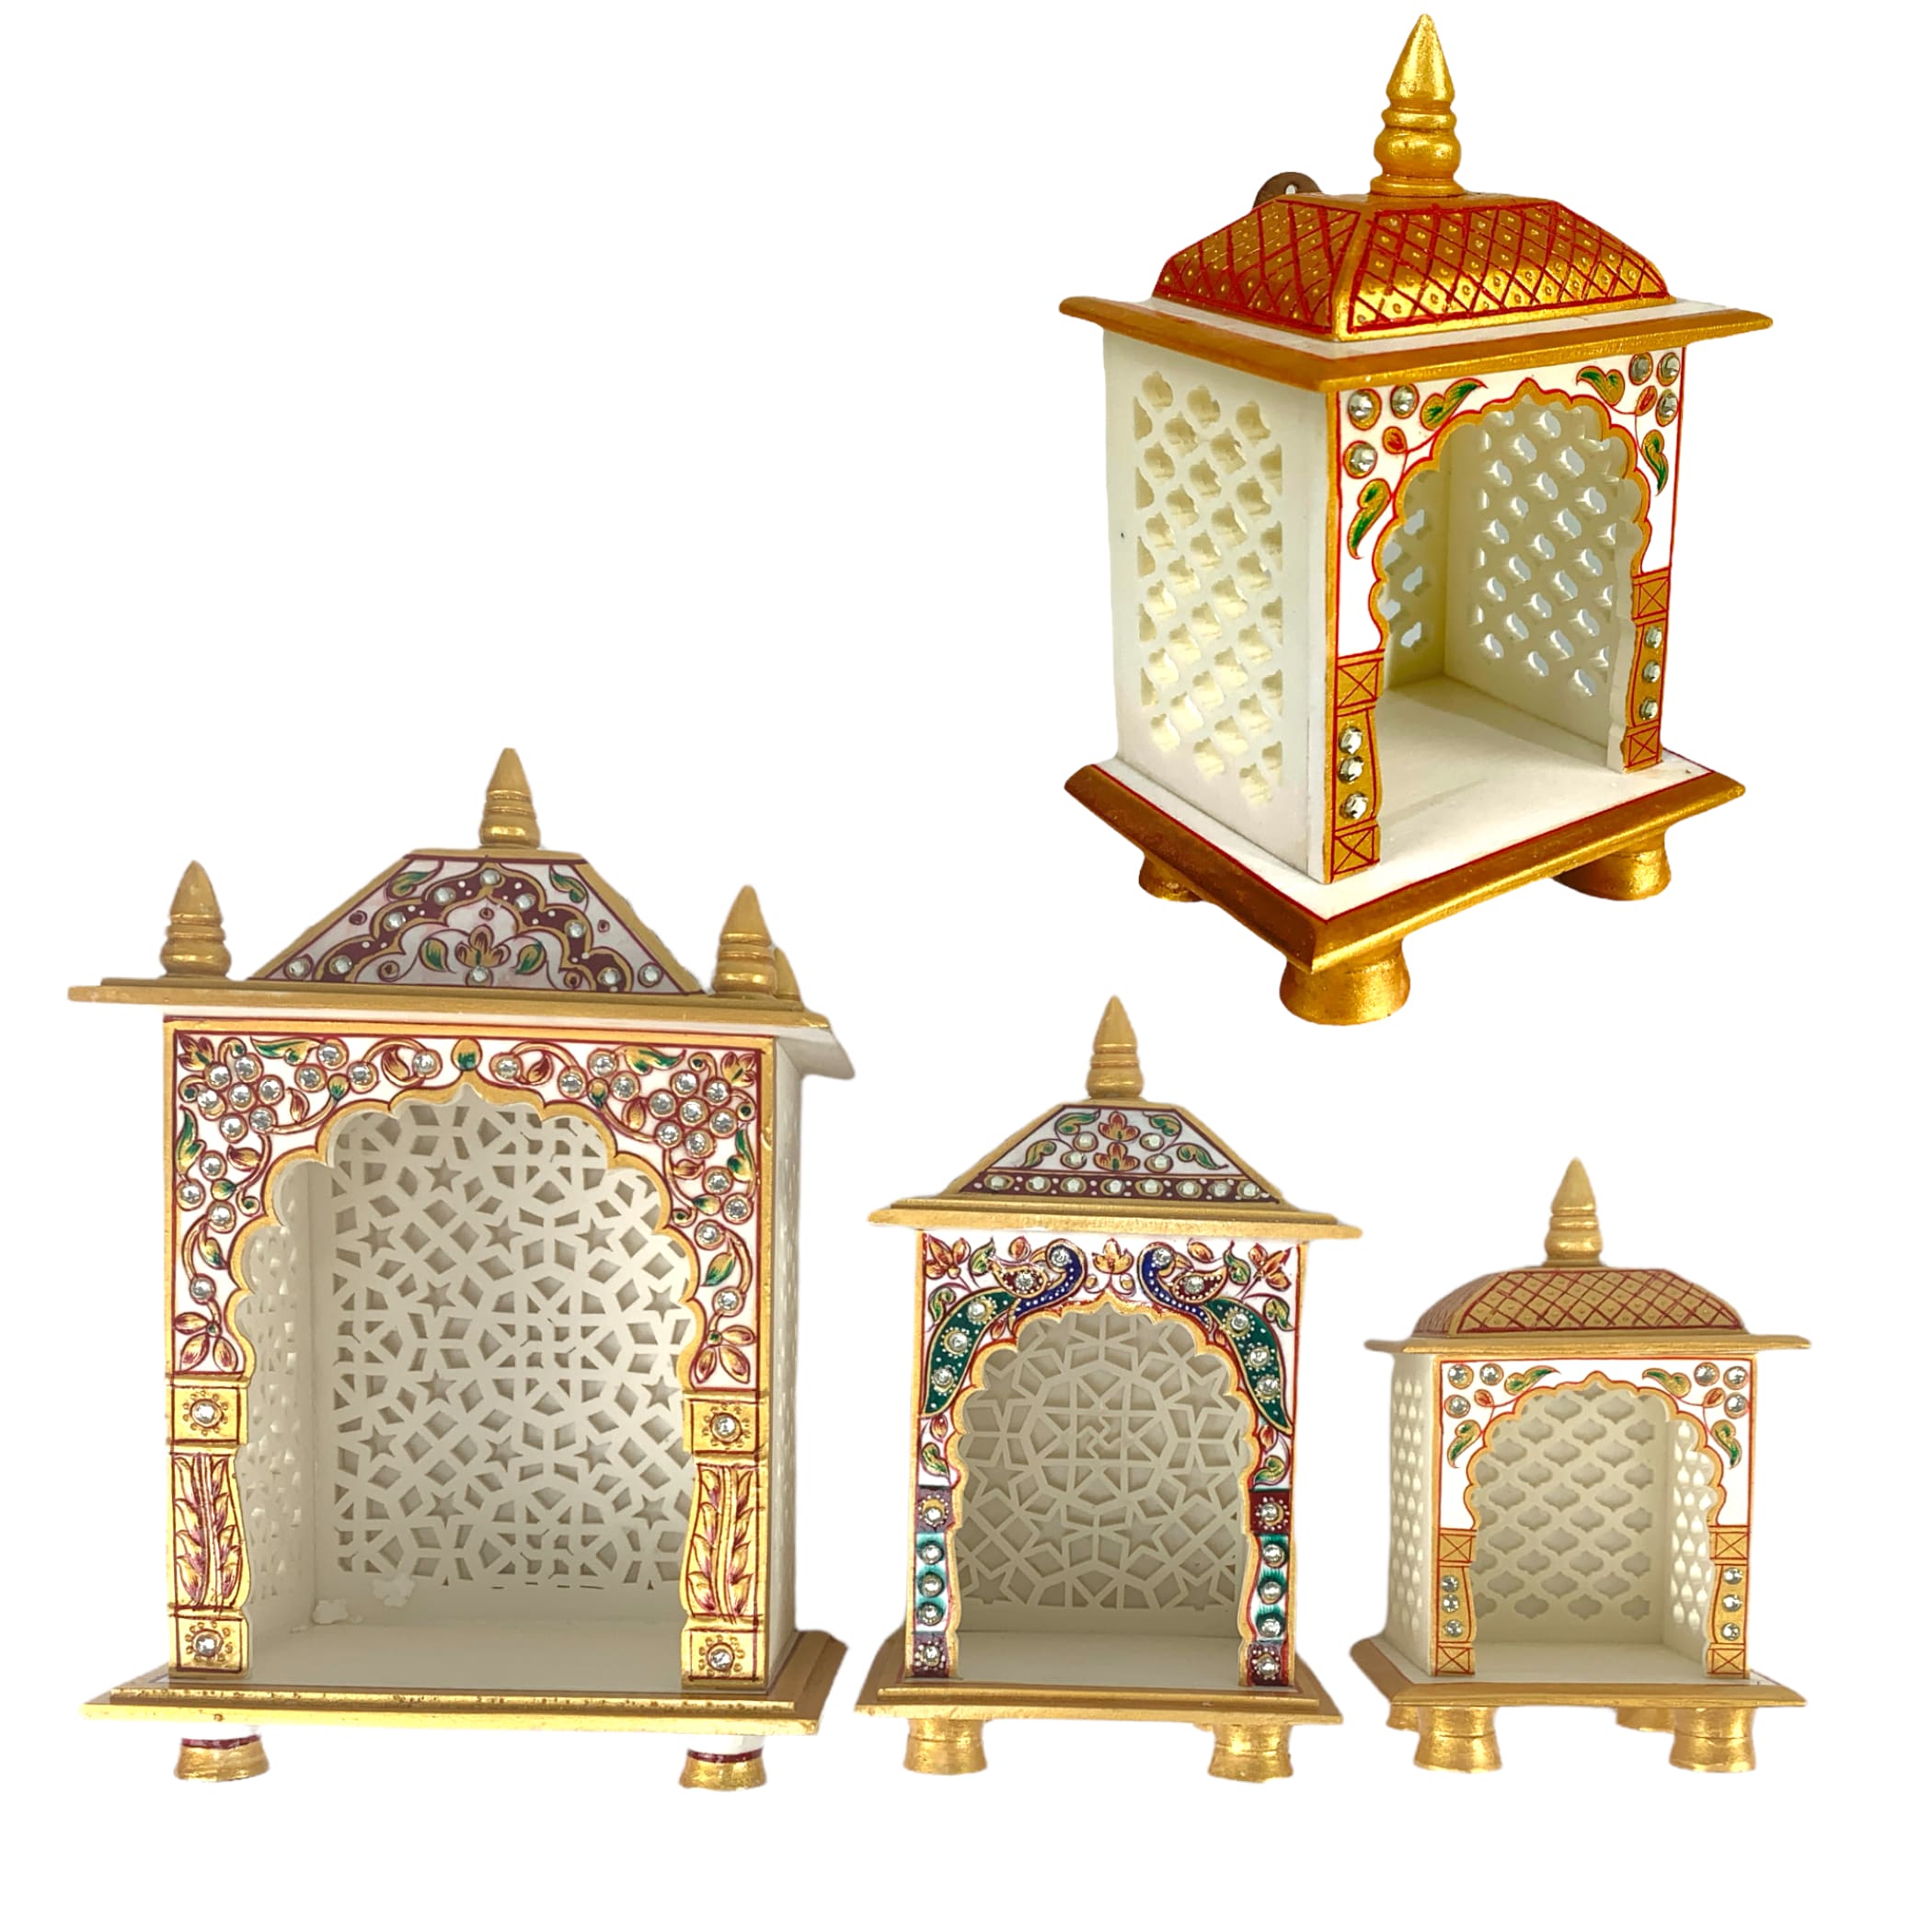 Laddu gopal temple for pooja mandir kanha ji singhasan